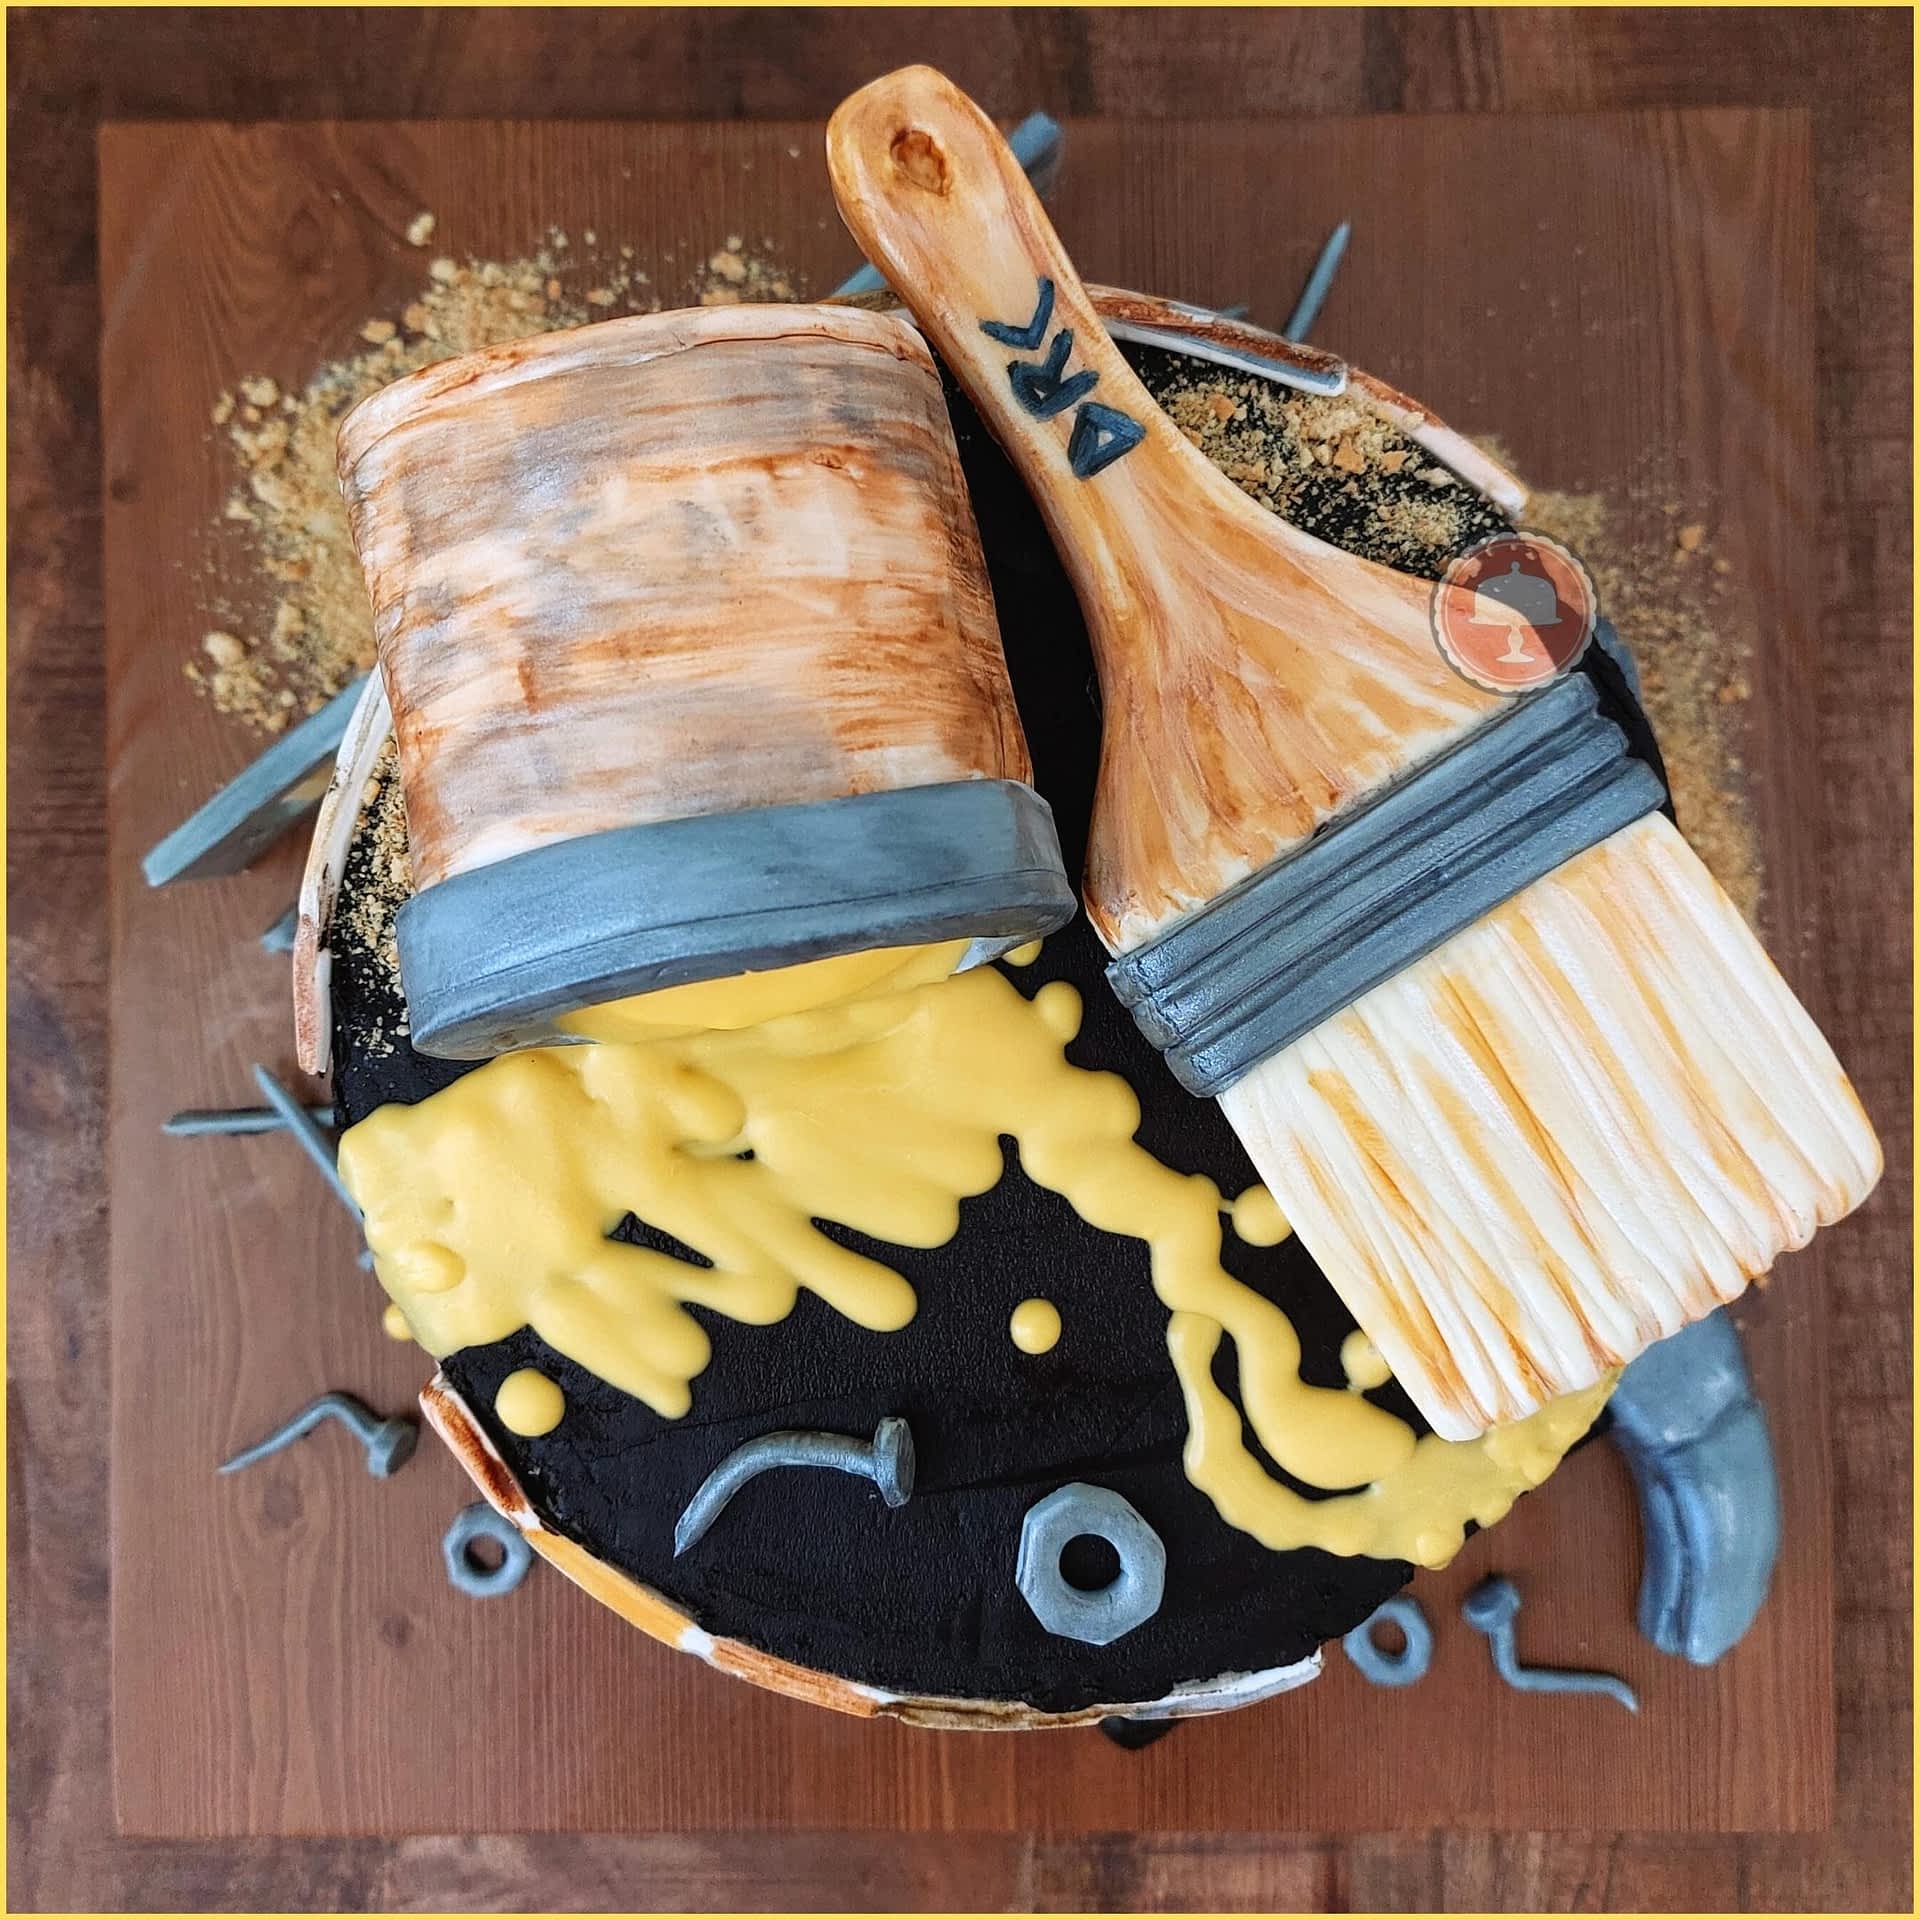 Popular Carpenters Cake Ideas - Tool Cake - CakeLovesMe - Cake Baking Tips and Tricks, Cake Trends, Special Occasion Cakes - mini cake ideas -